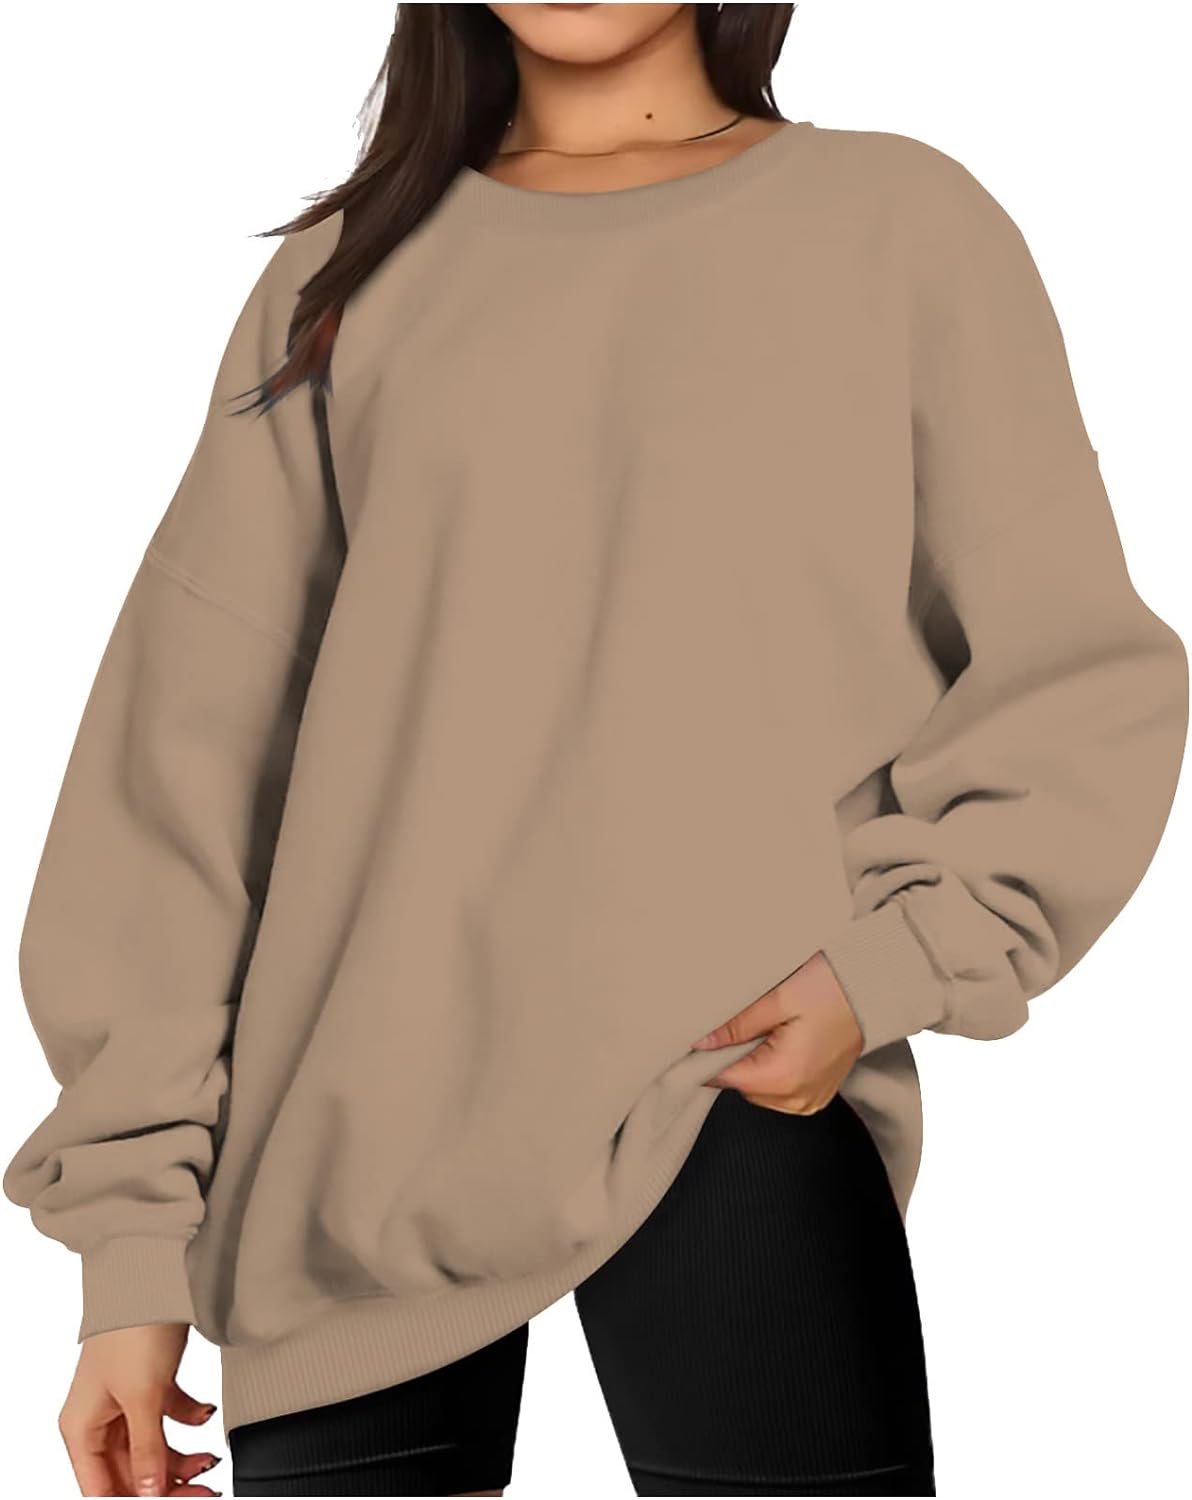 Stessotudo Oversized Sweatshirts for Women Crewneck Long Sleeve Baggy Boyfriend Tops Loose Fit Solid Casual Y2K Streetwear